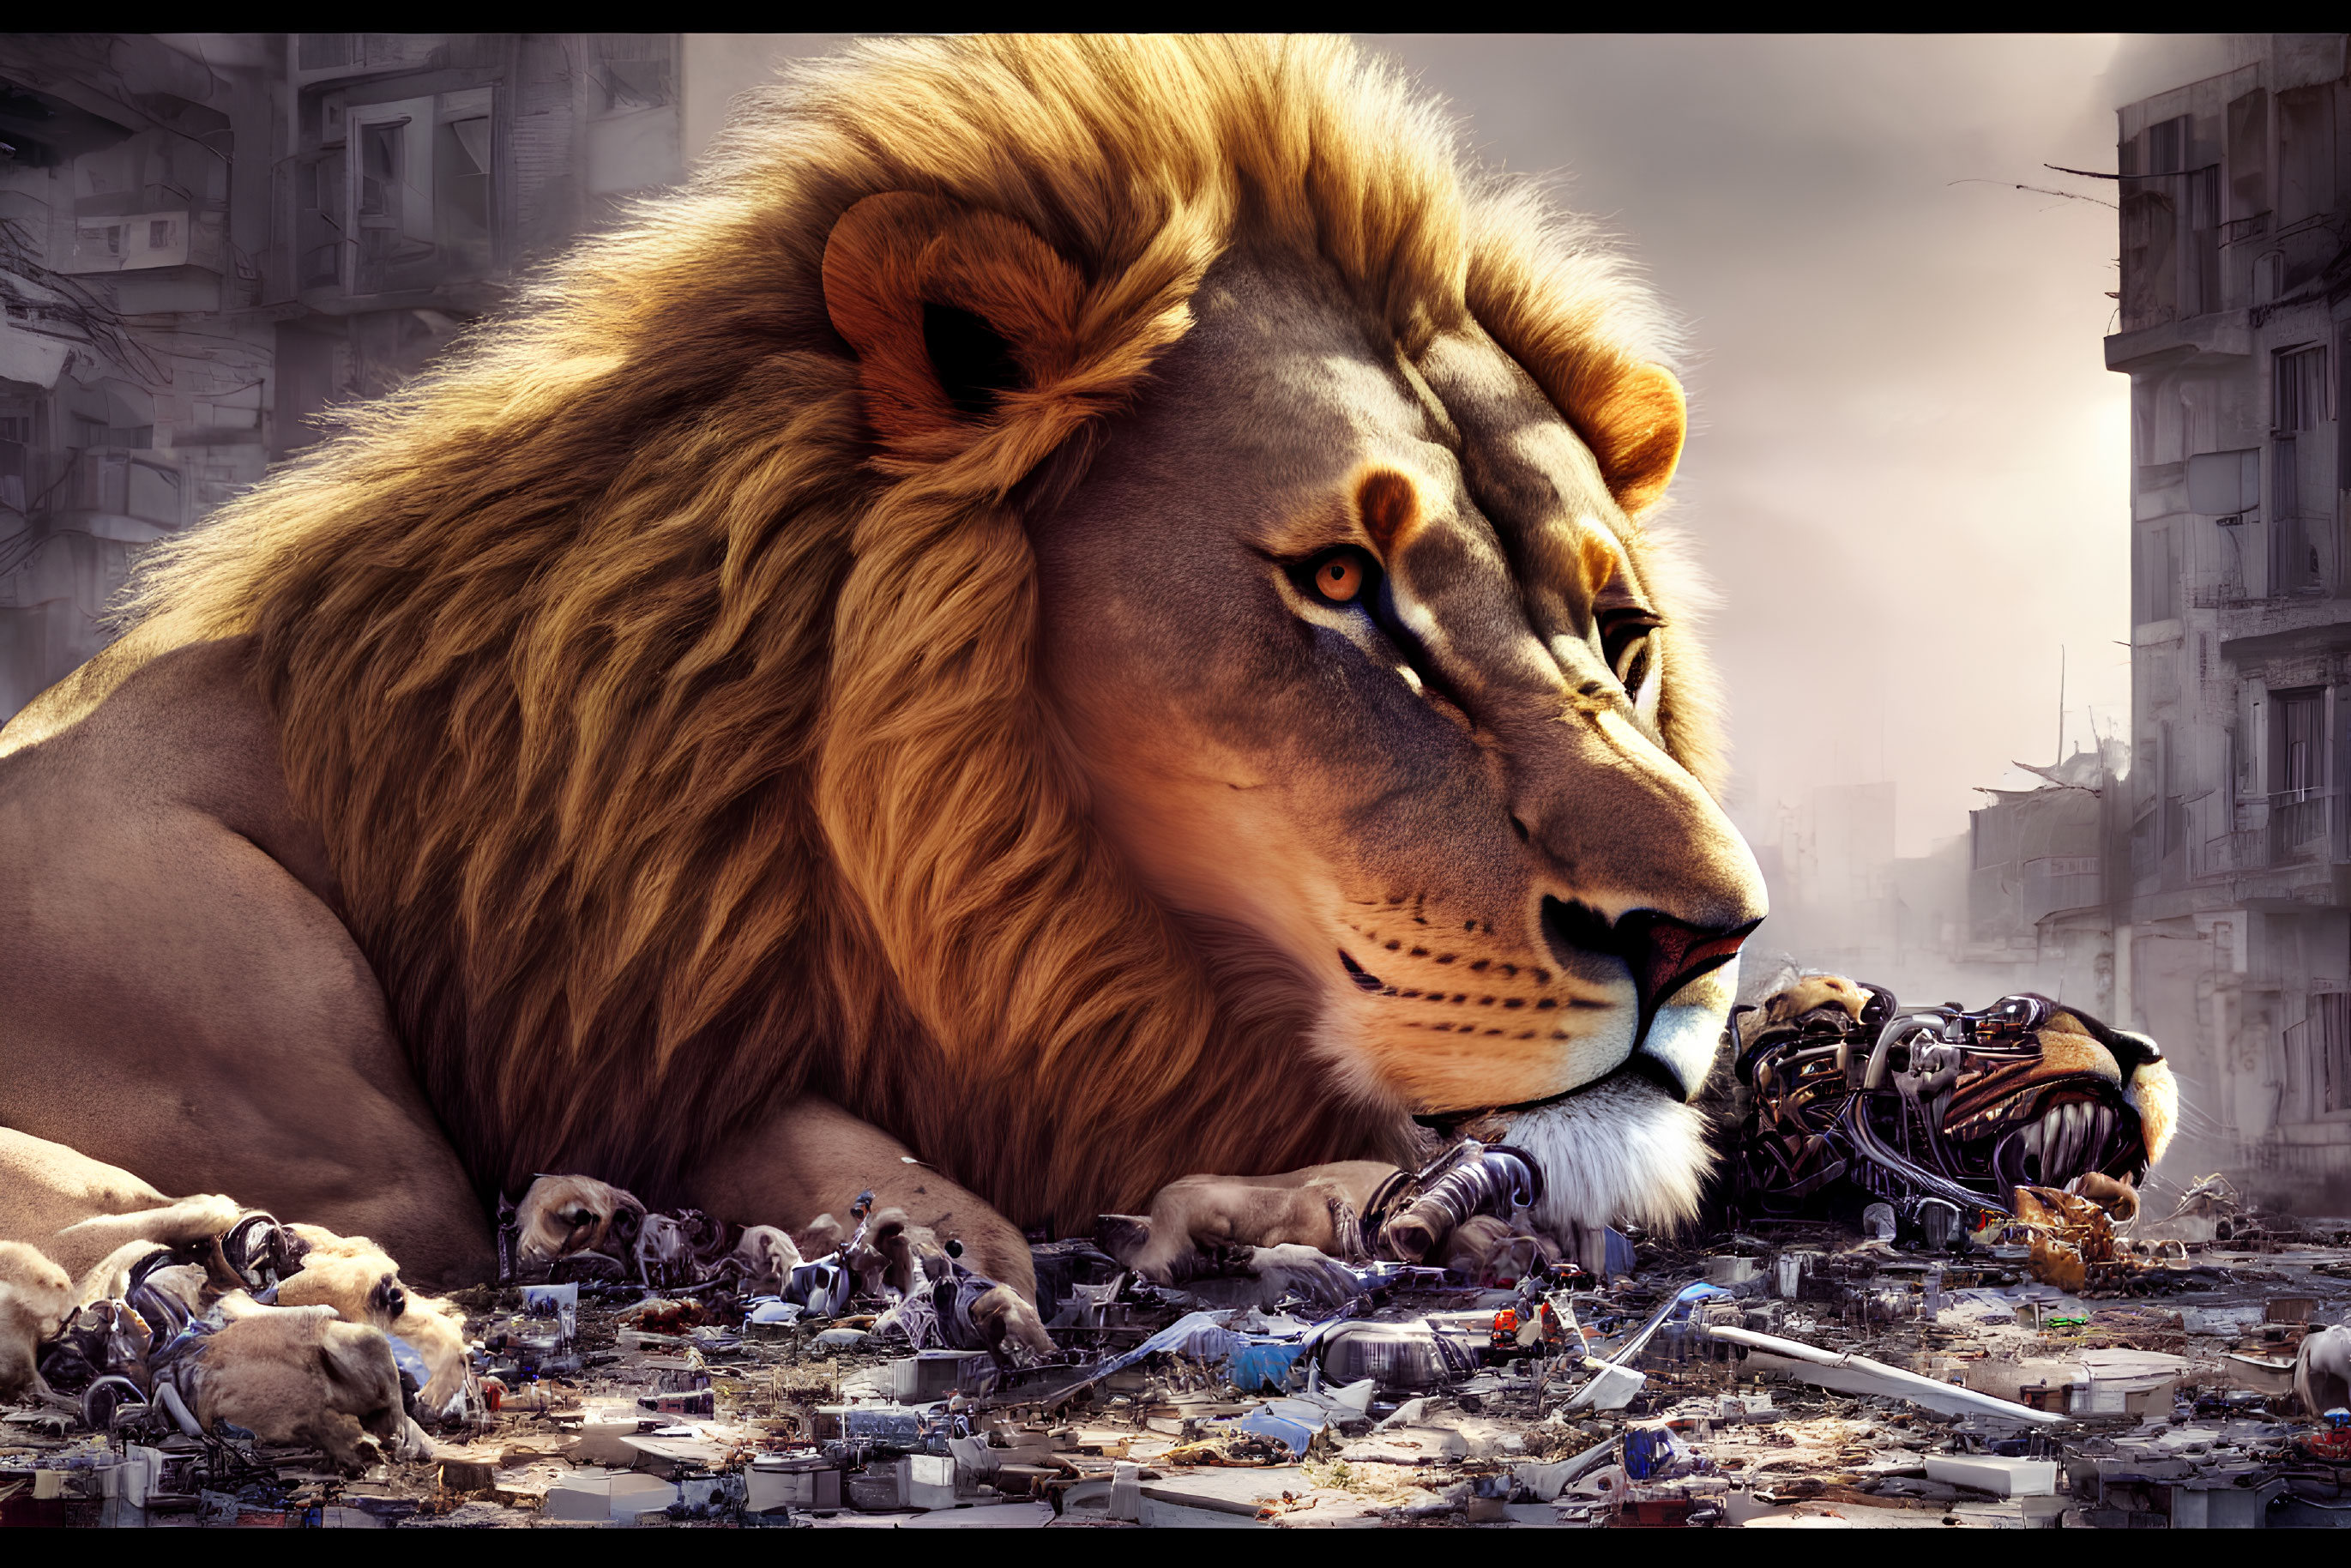 Majestic lion in dystopian cityscape with rubble and debris